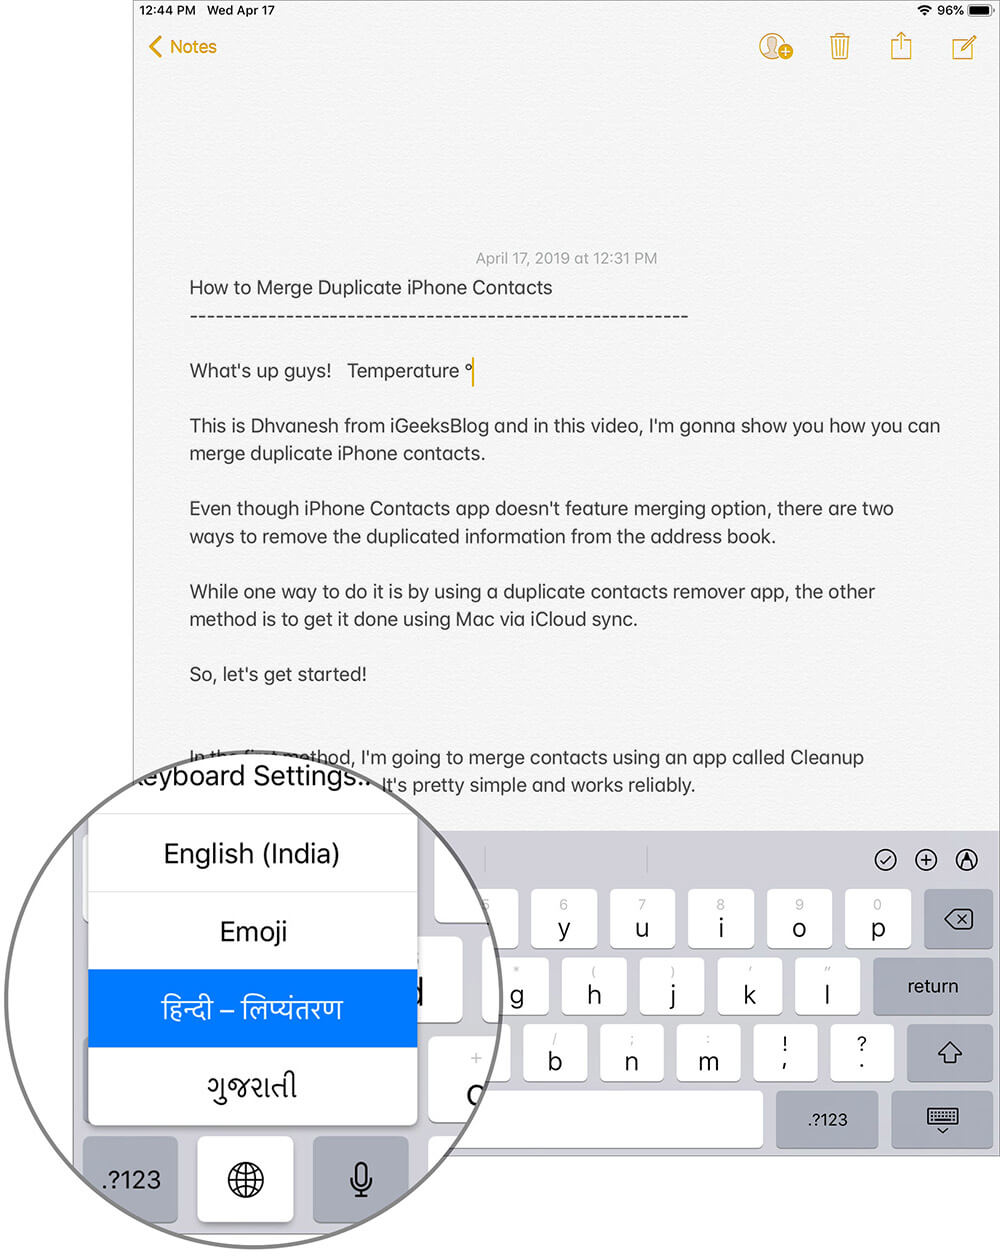 Switch between languages on iPad keyboard